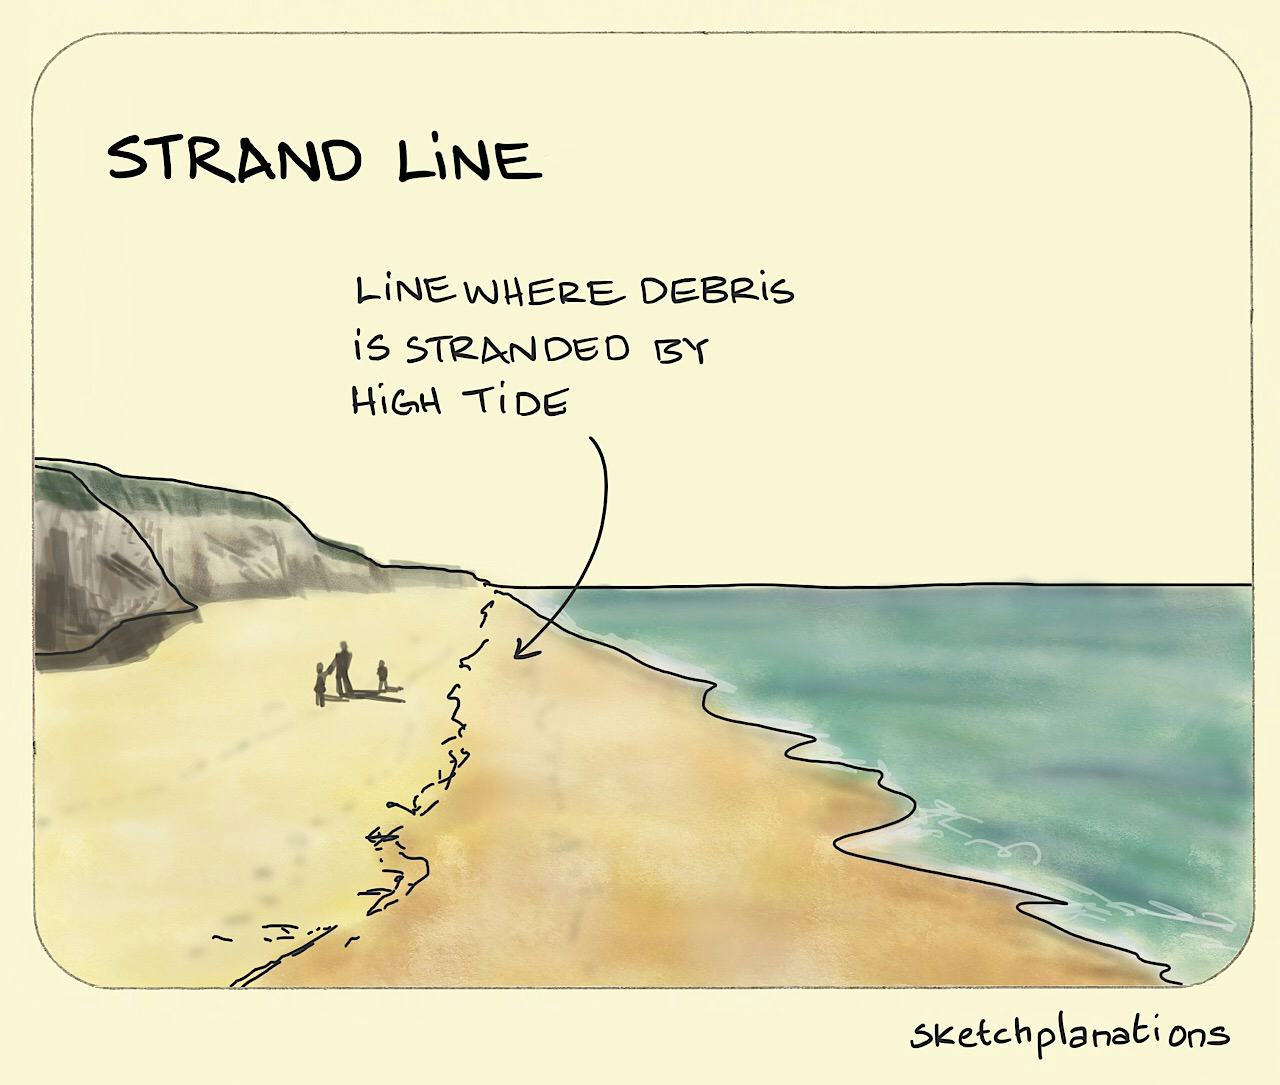 Strand line - Sketchplanations